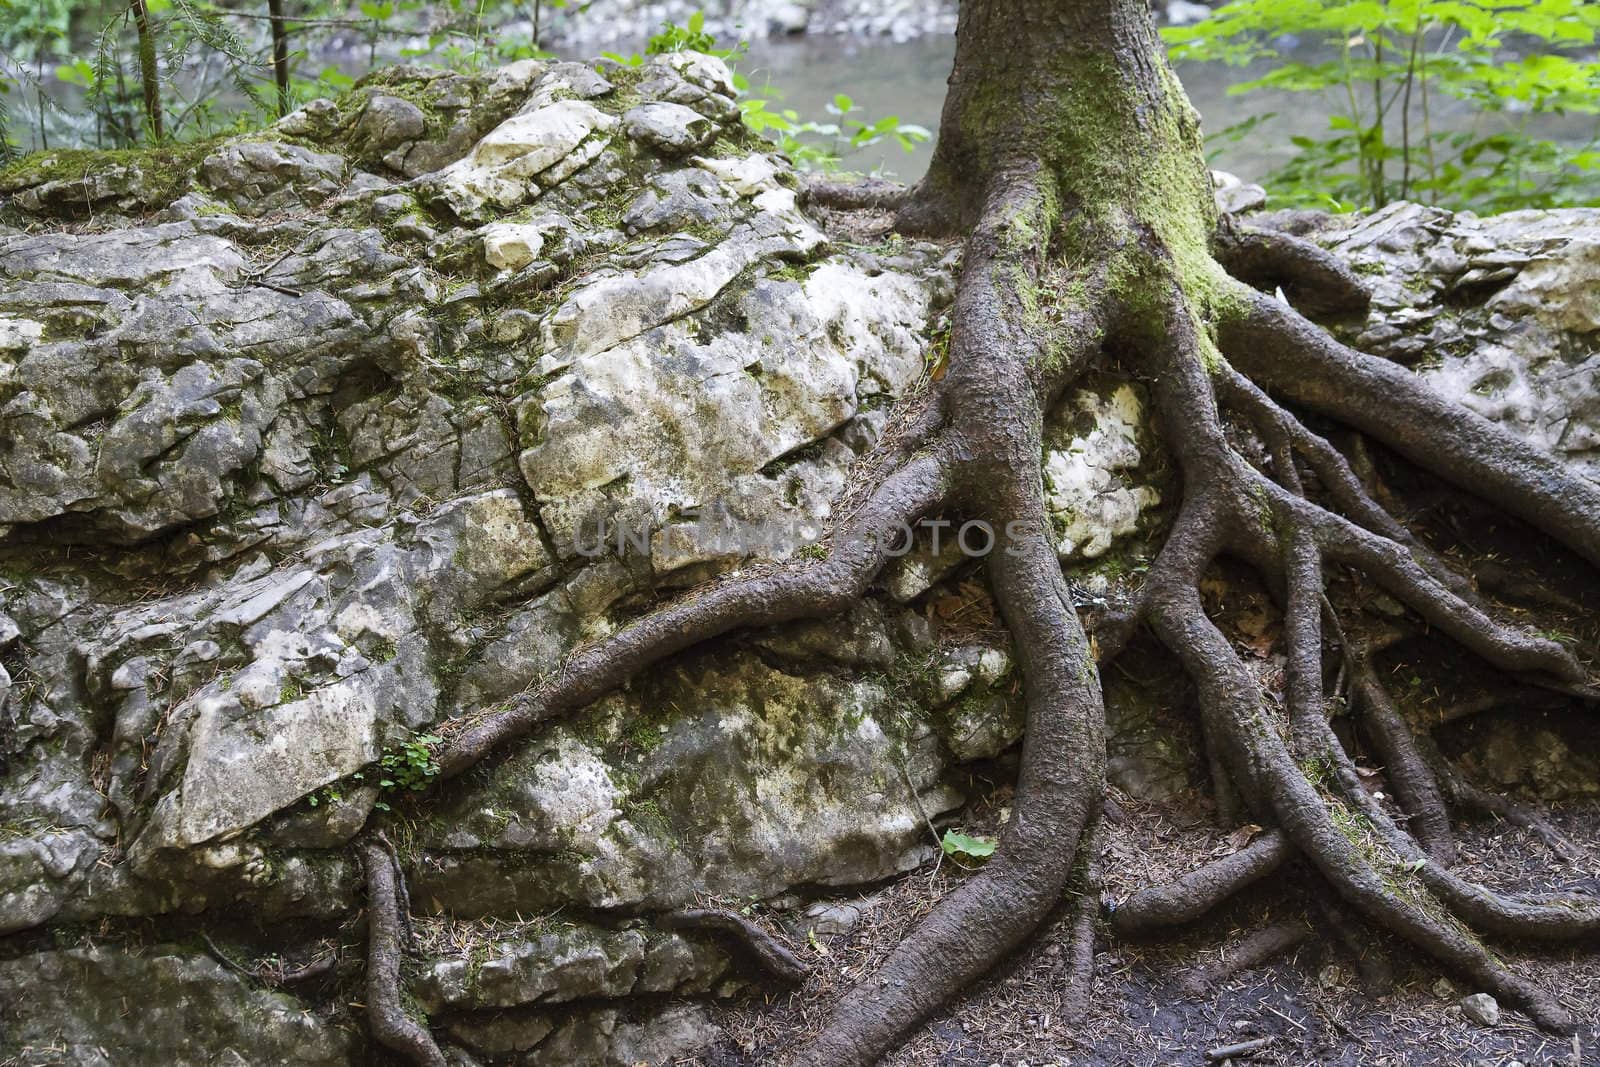 tree growing on the rock - Slovak Paradise by furzyk73